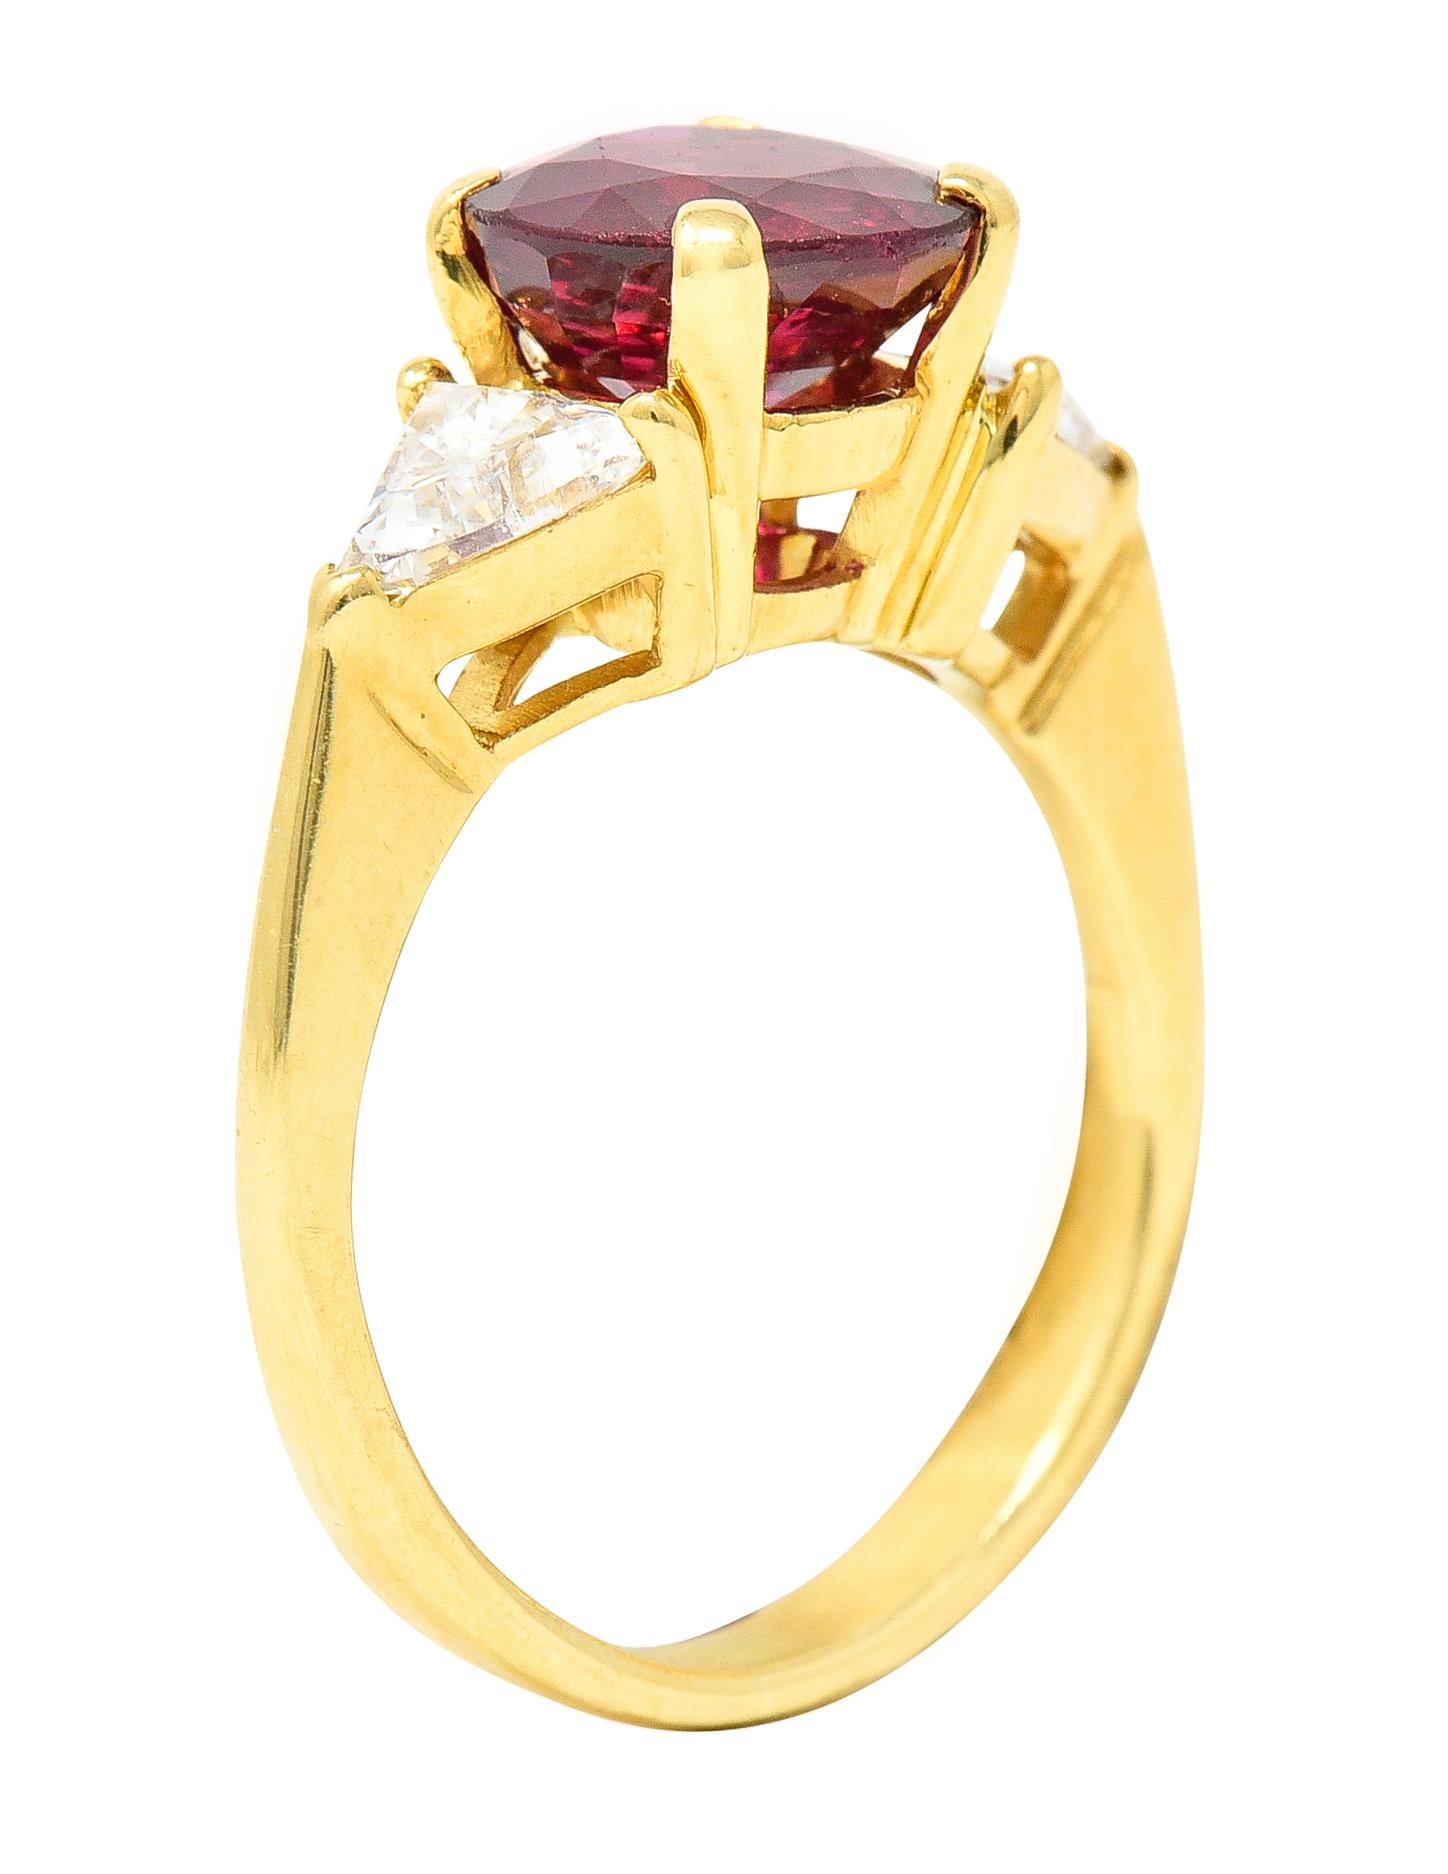 Vintage 2.78 Carats No Heat Ruby Diamond Vintage Three Stone Gemstone Ring GIA 2